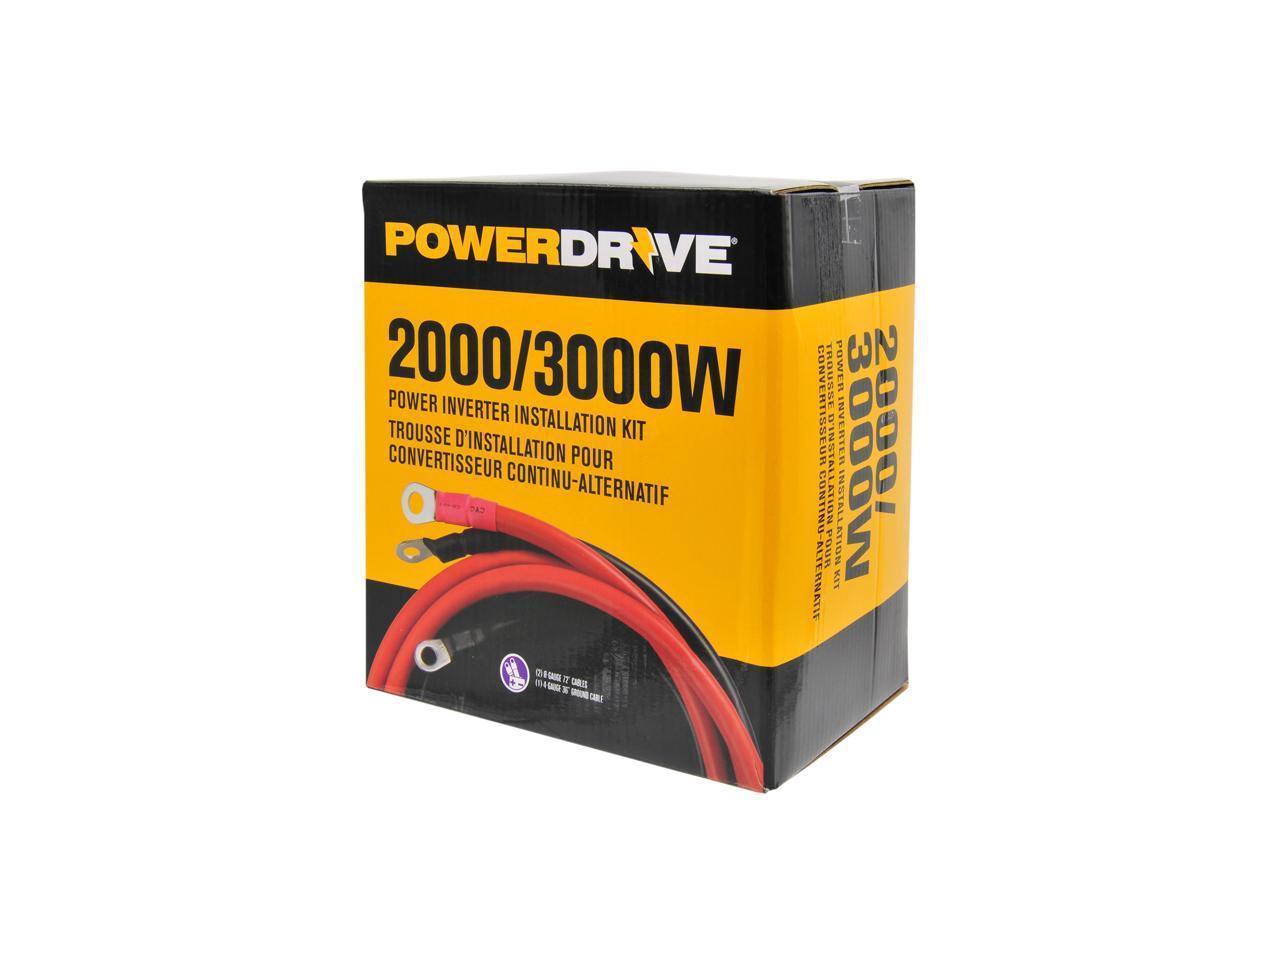 √ power drive 2000 inverter 183031-Power drive 2000 inverter - Irasujoz8huj